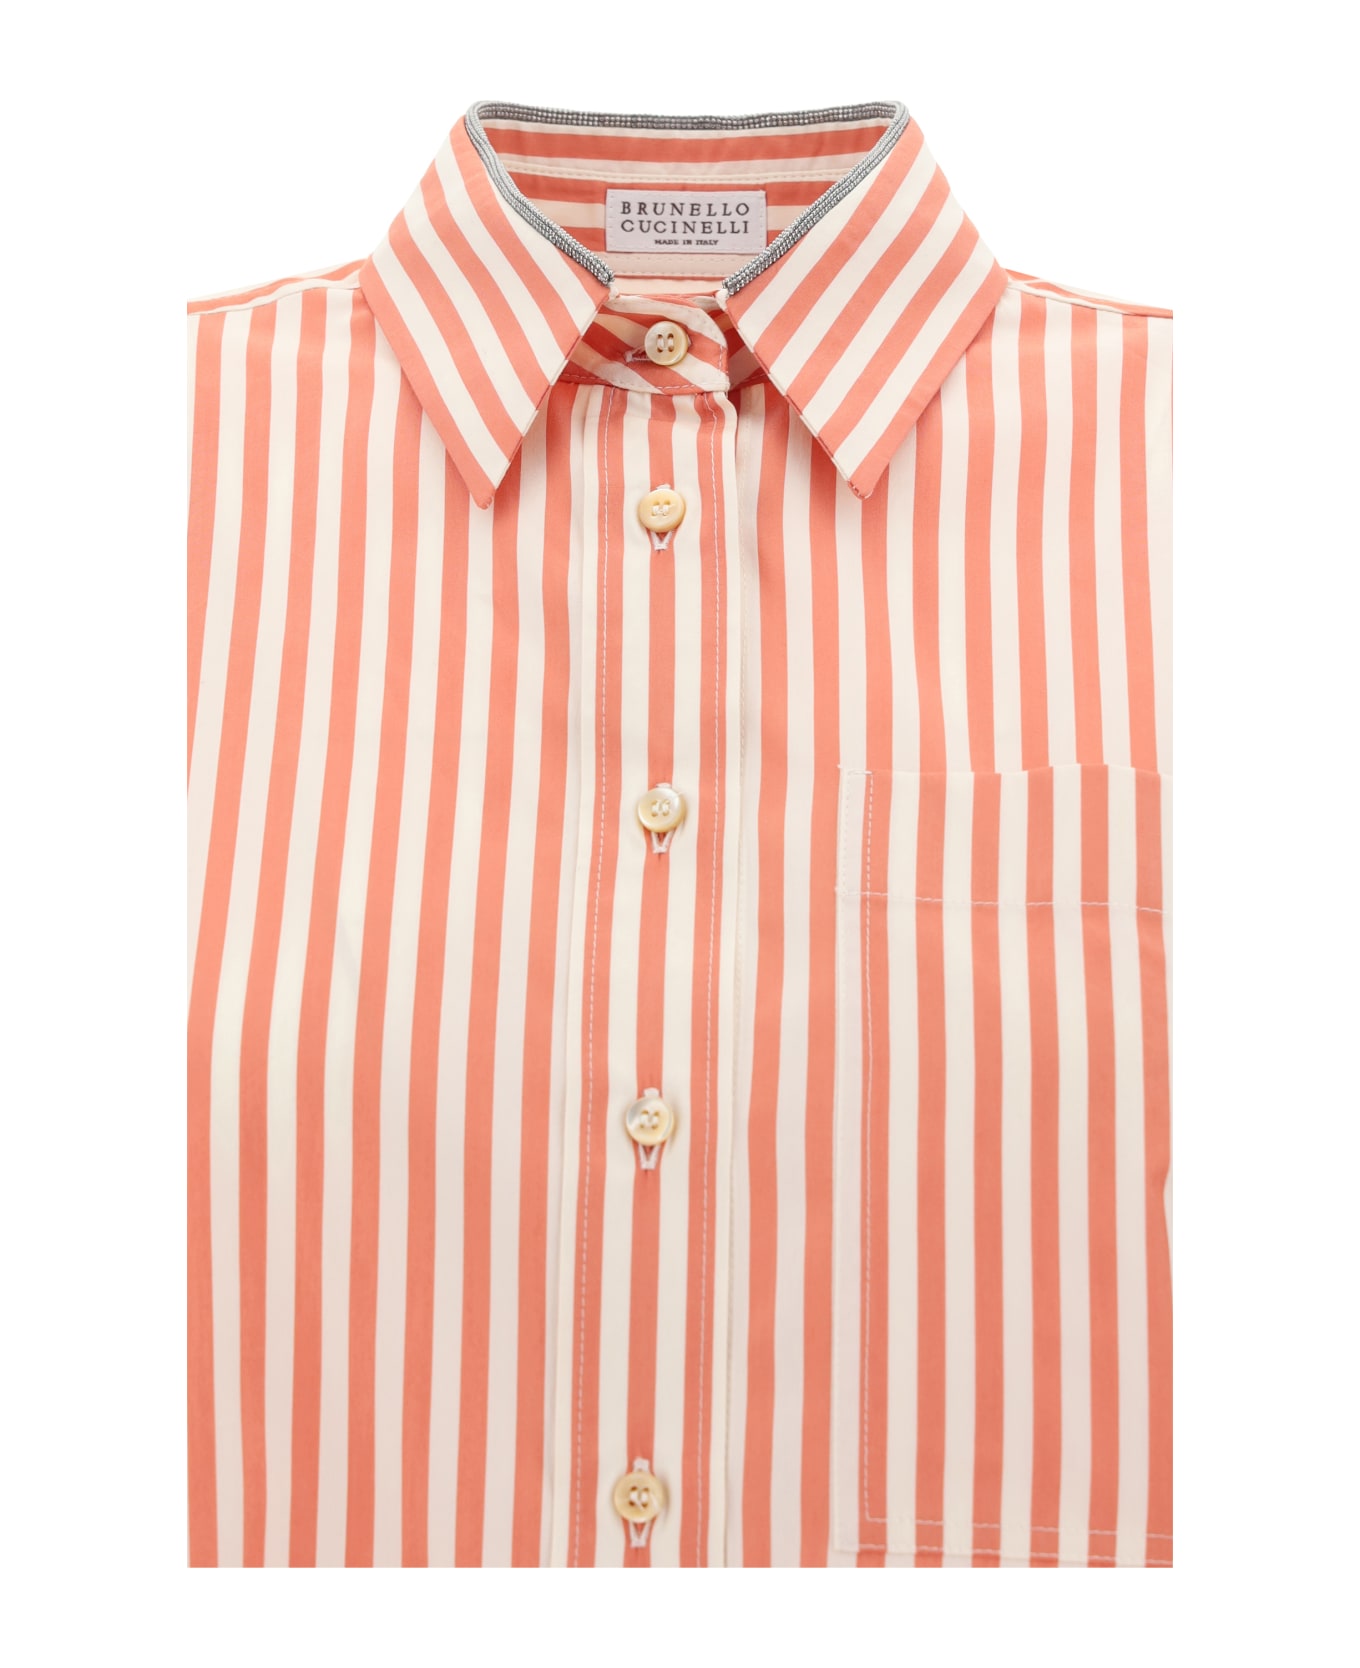 Brunello Cucinelli Shirt - Panama/arancio